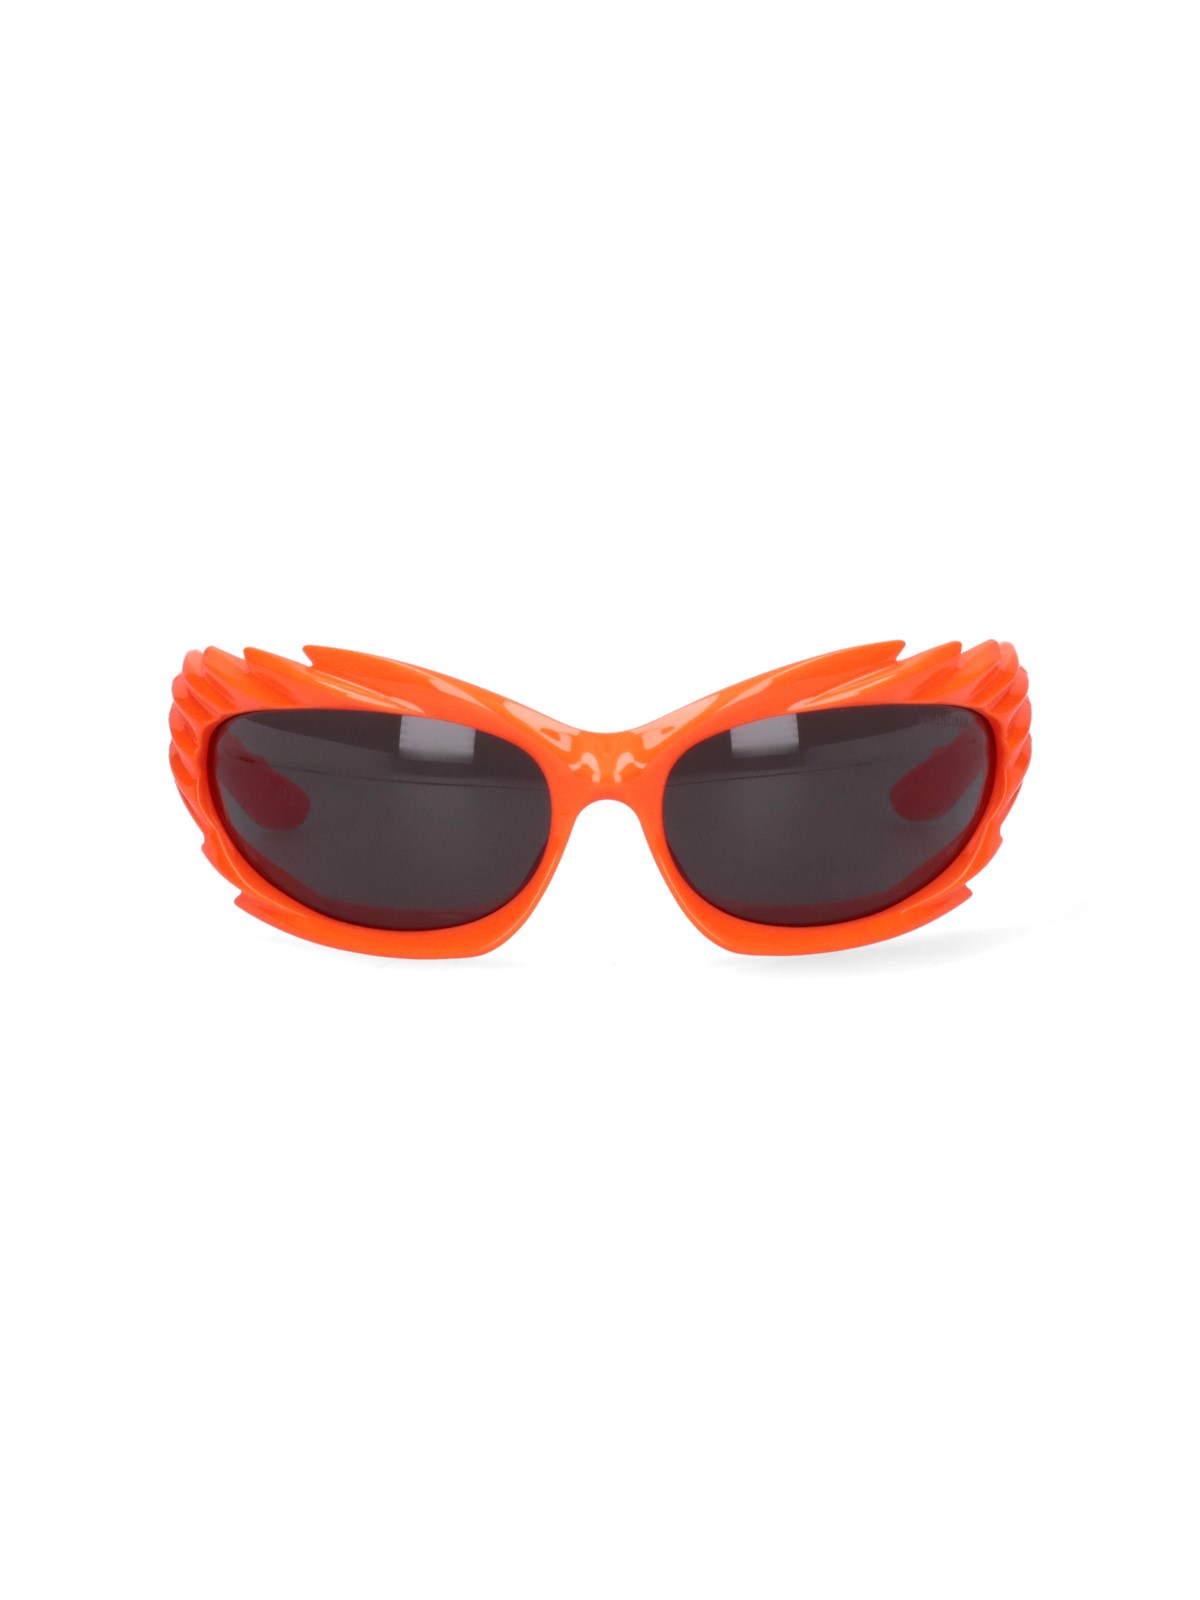 Balenciaga 'spike rectangle' sunglasses available on SUGAR - 123519